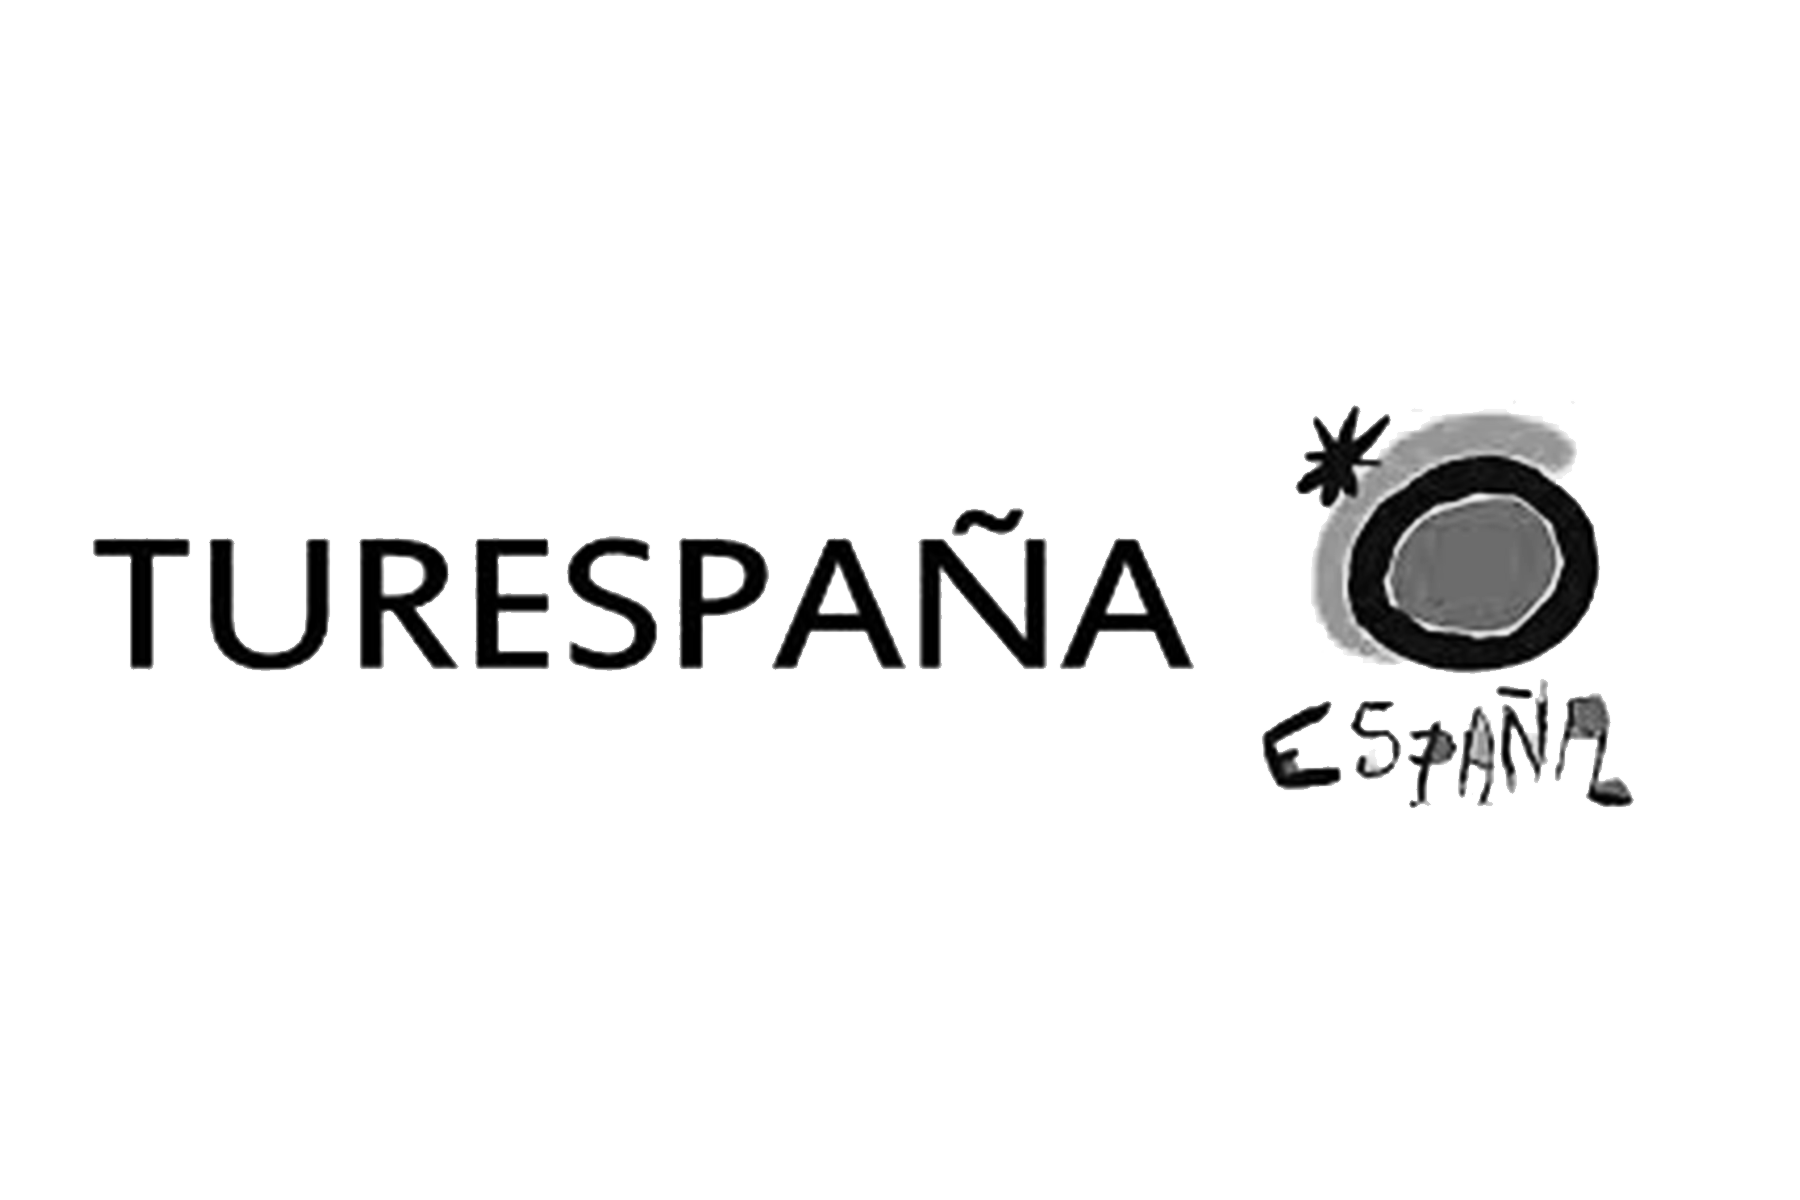 Turespana Spain Tourism Board